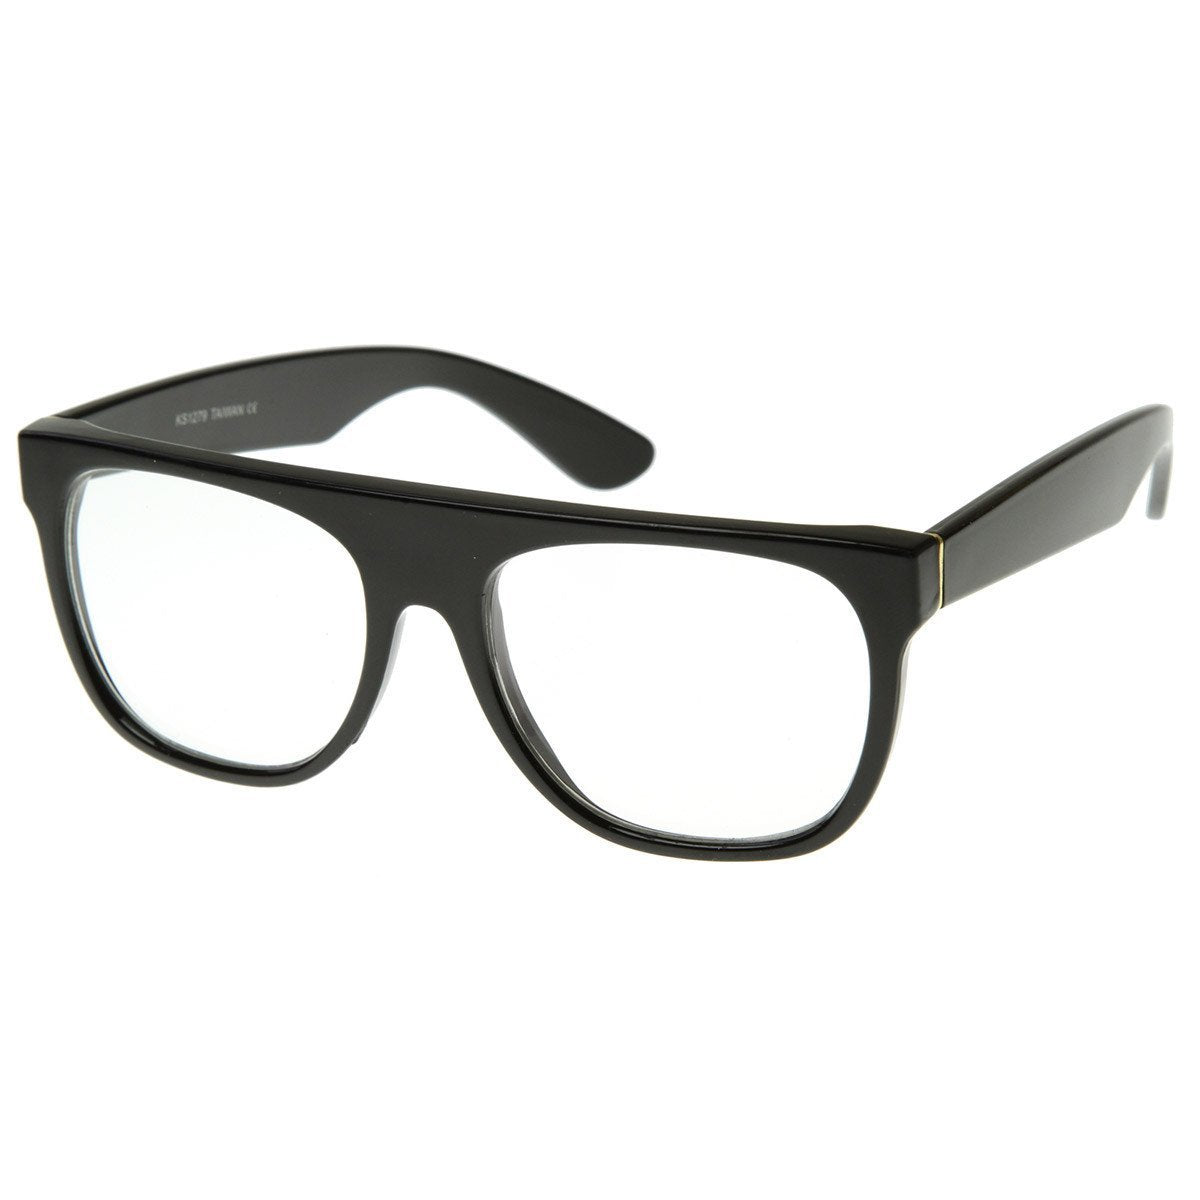 Retro Super Hipster Flat Top Horned Rim Clear Lens Glasses